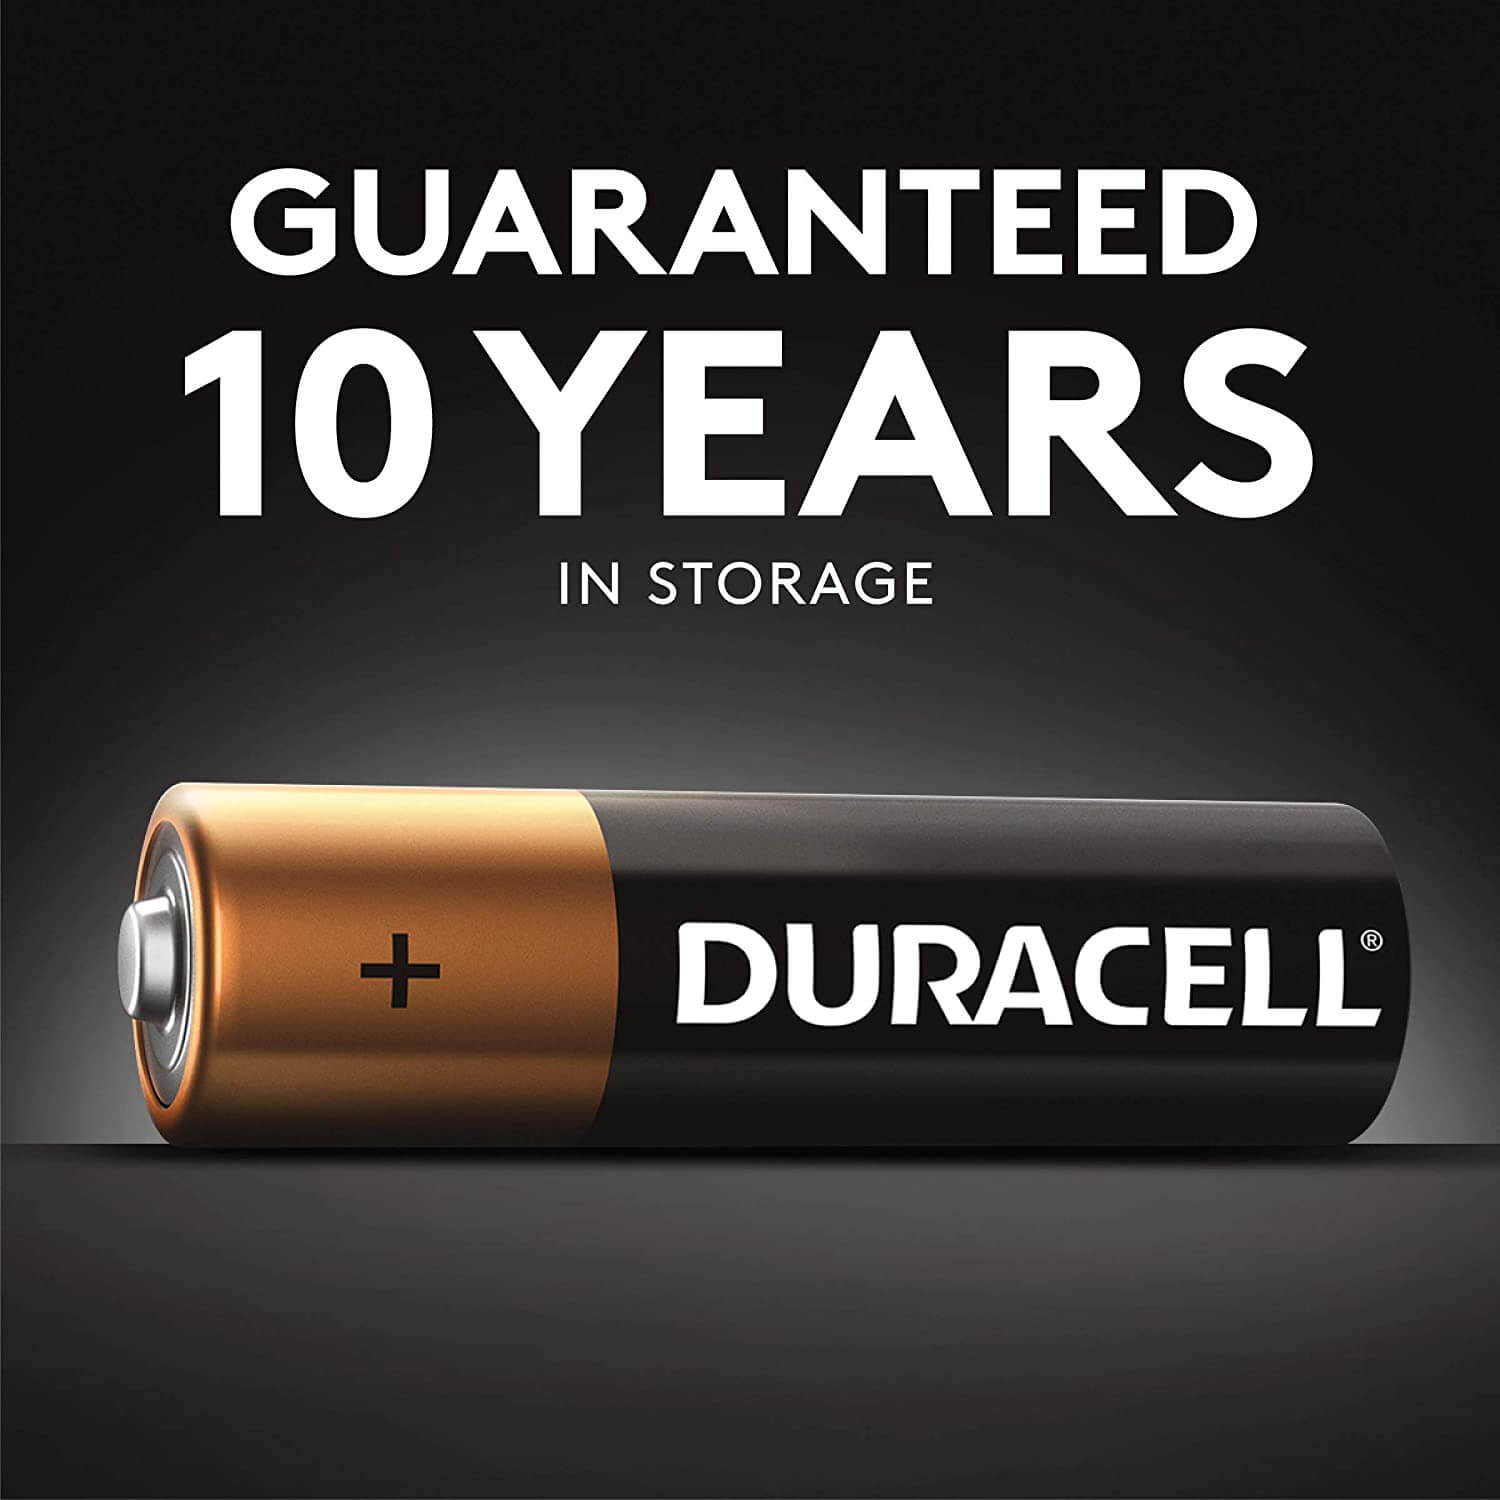 Duracell 10 Year Guarantee